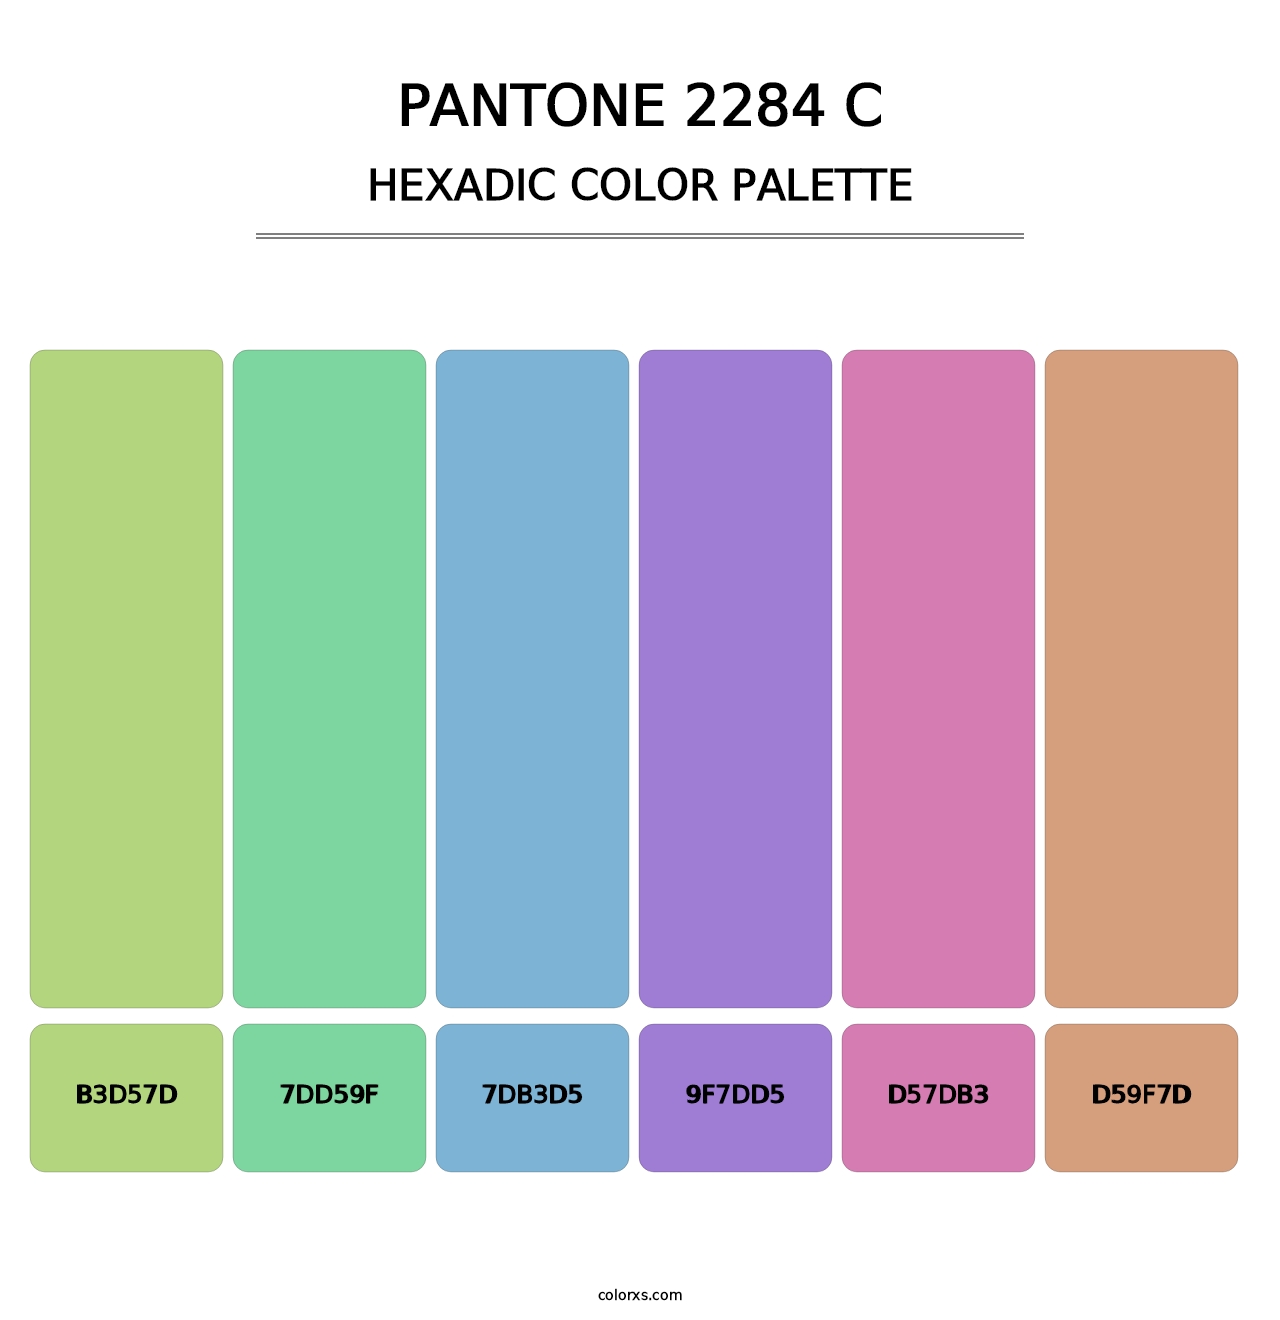 PANTONE 2284 C - Hexadic Color Palette